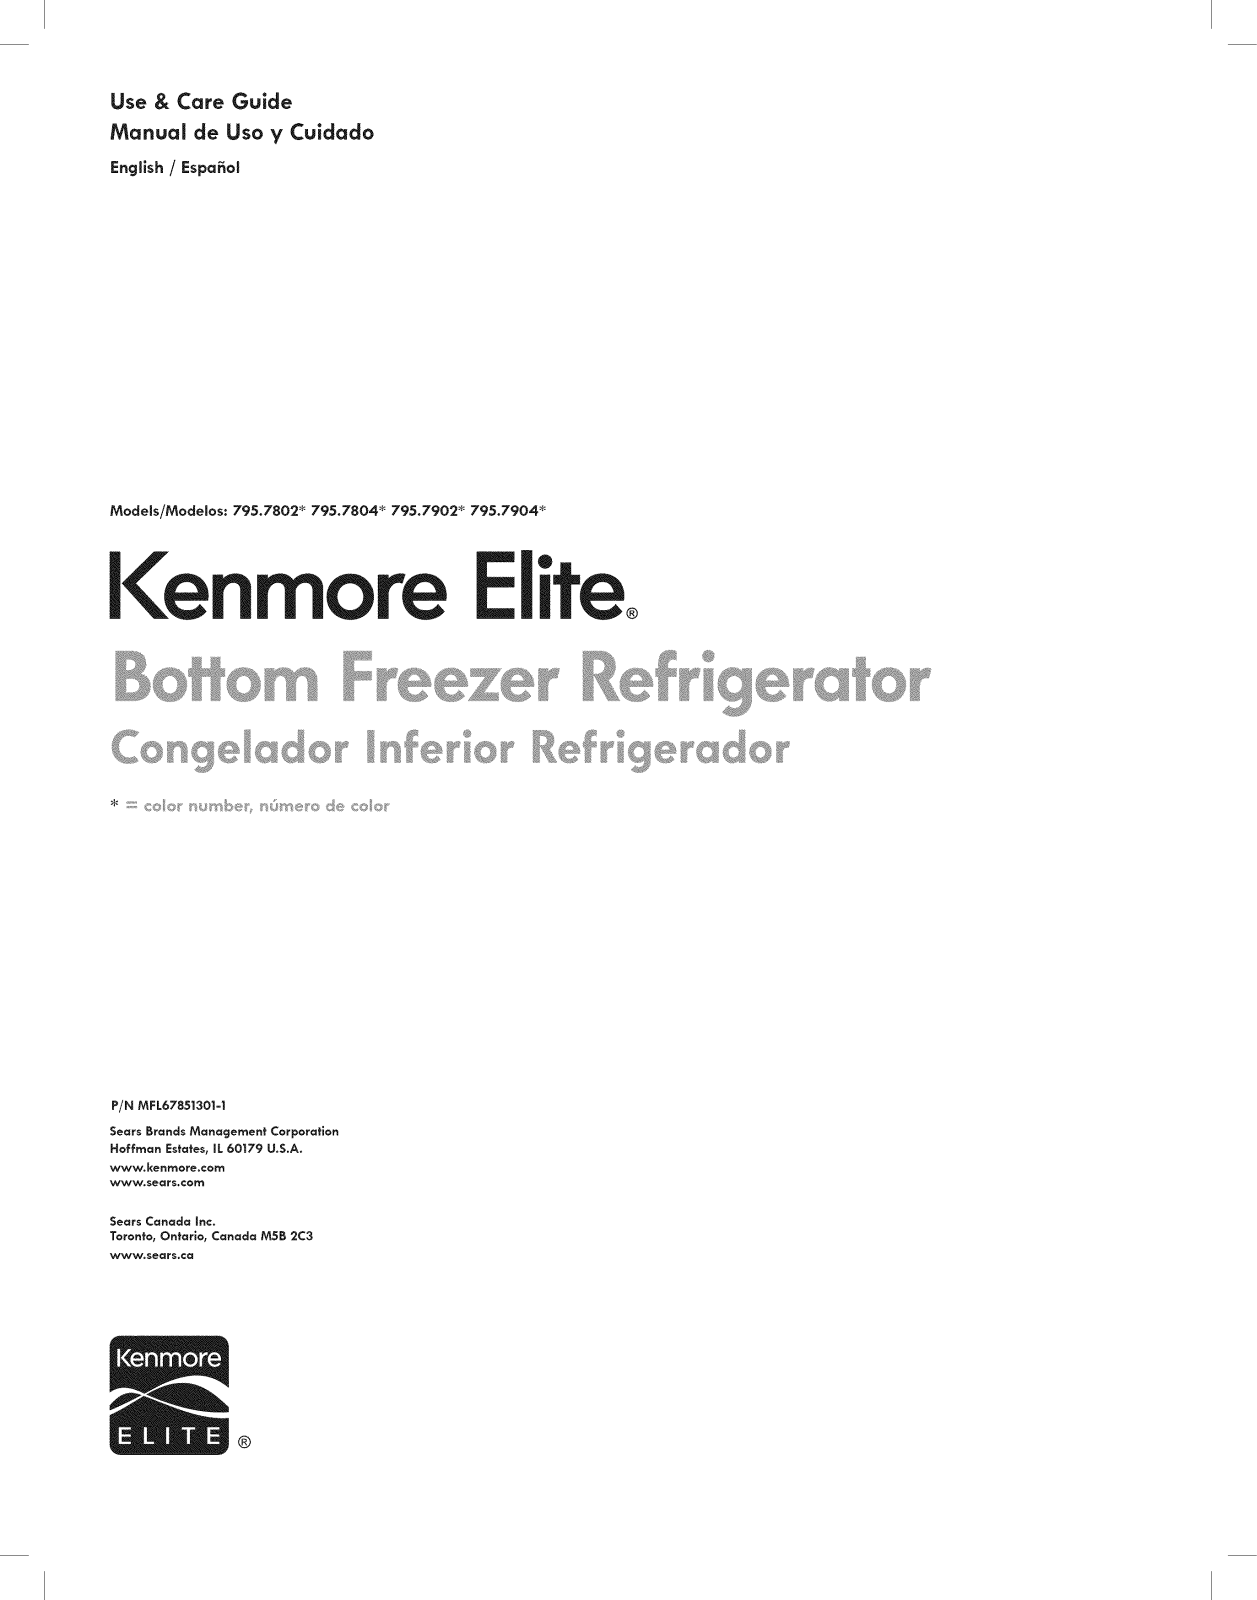 Kenmore Elite 79579049312, 79579049311, 79579044312, 79579044311, 79579042312 Owner’s Manual